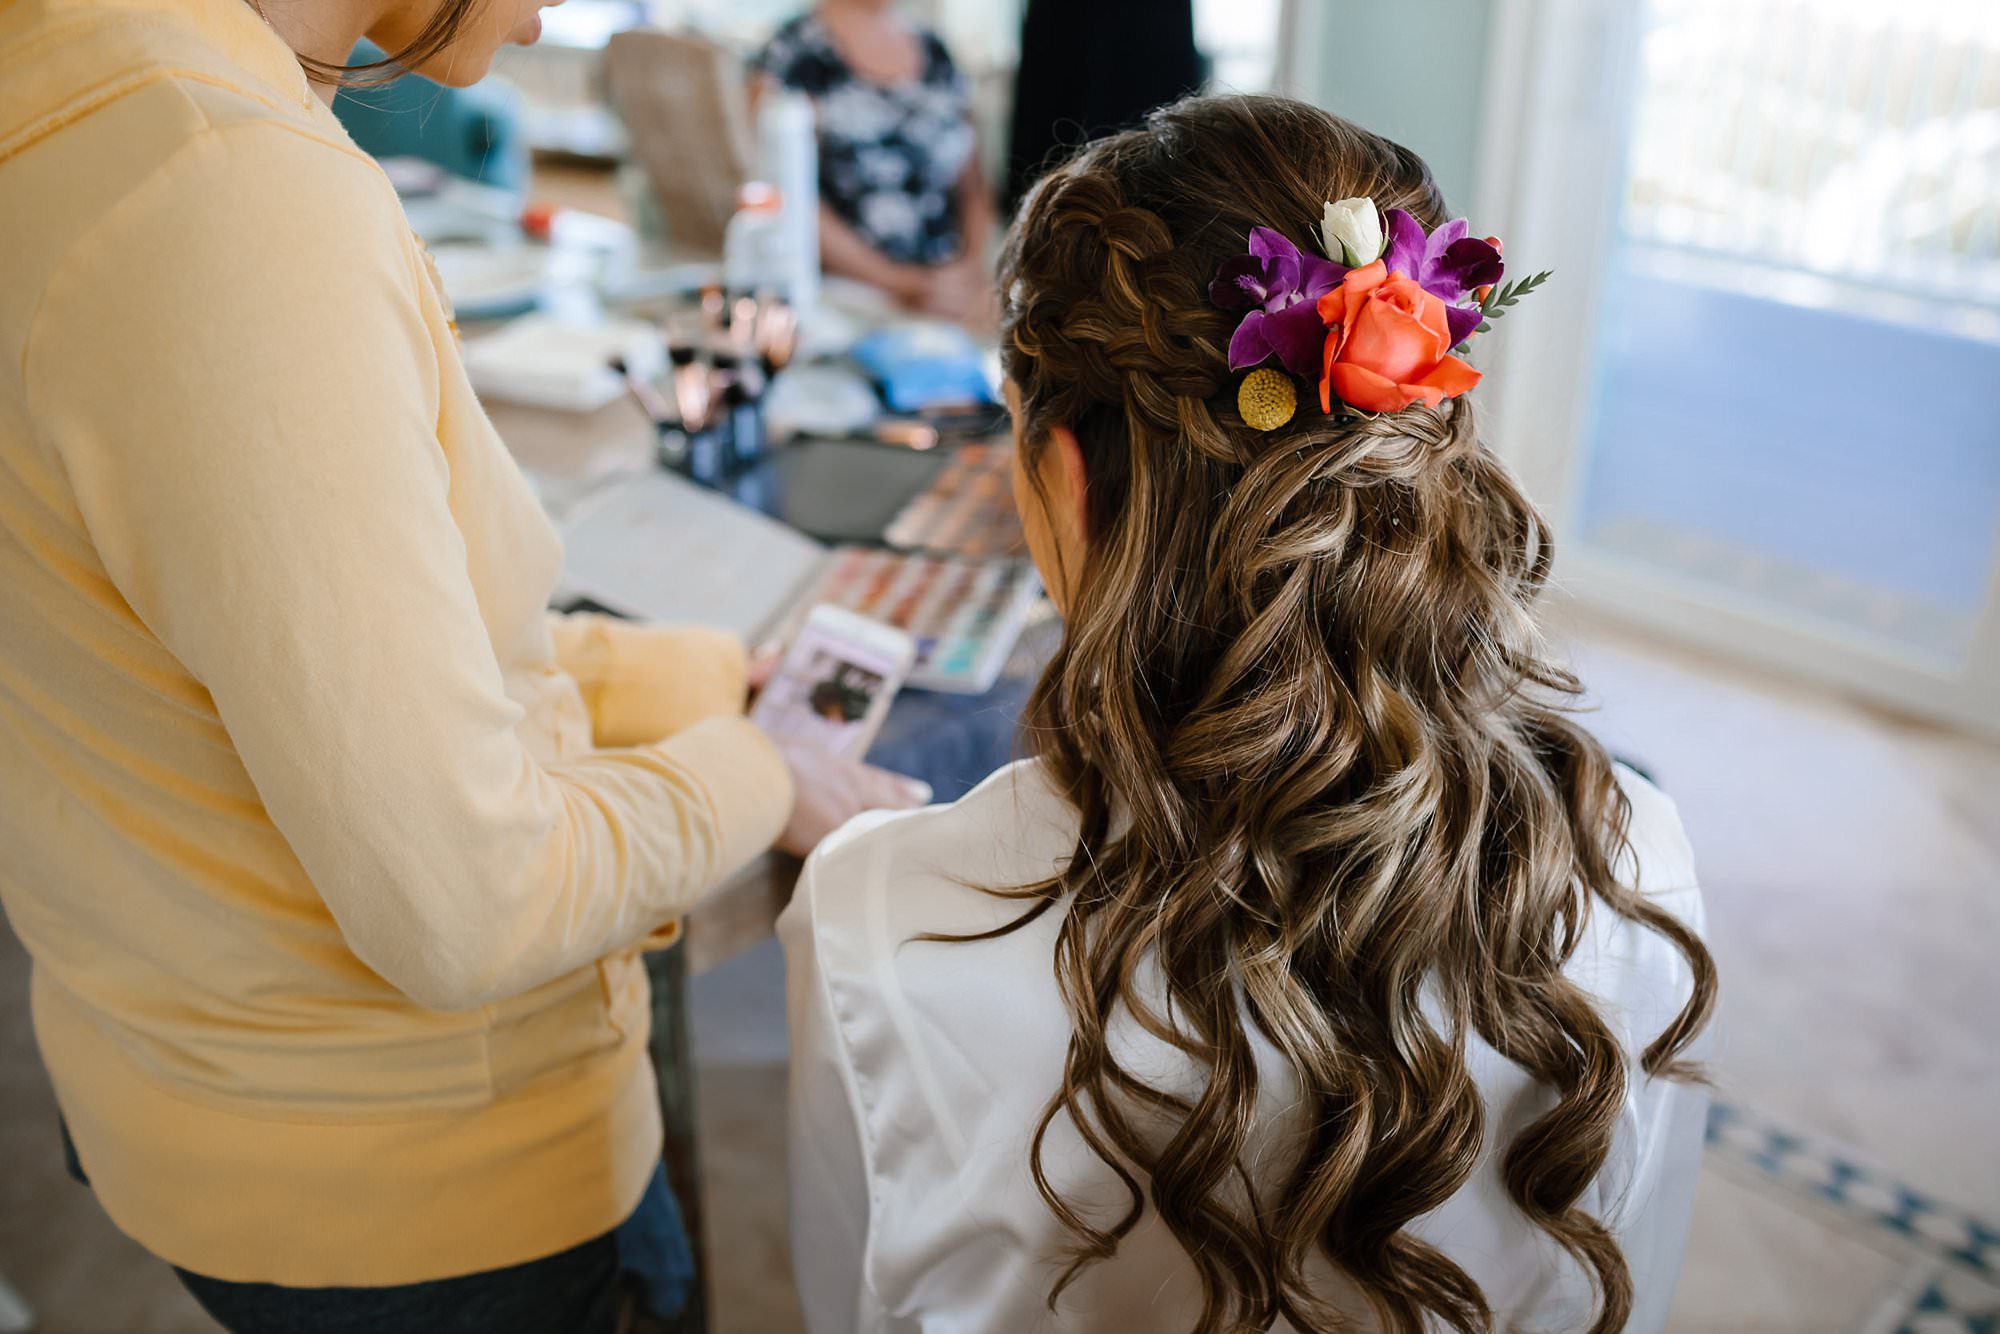 Bridal preparations showing flowers in brides hair